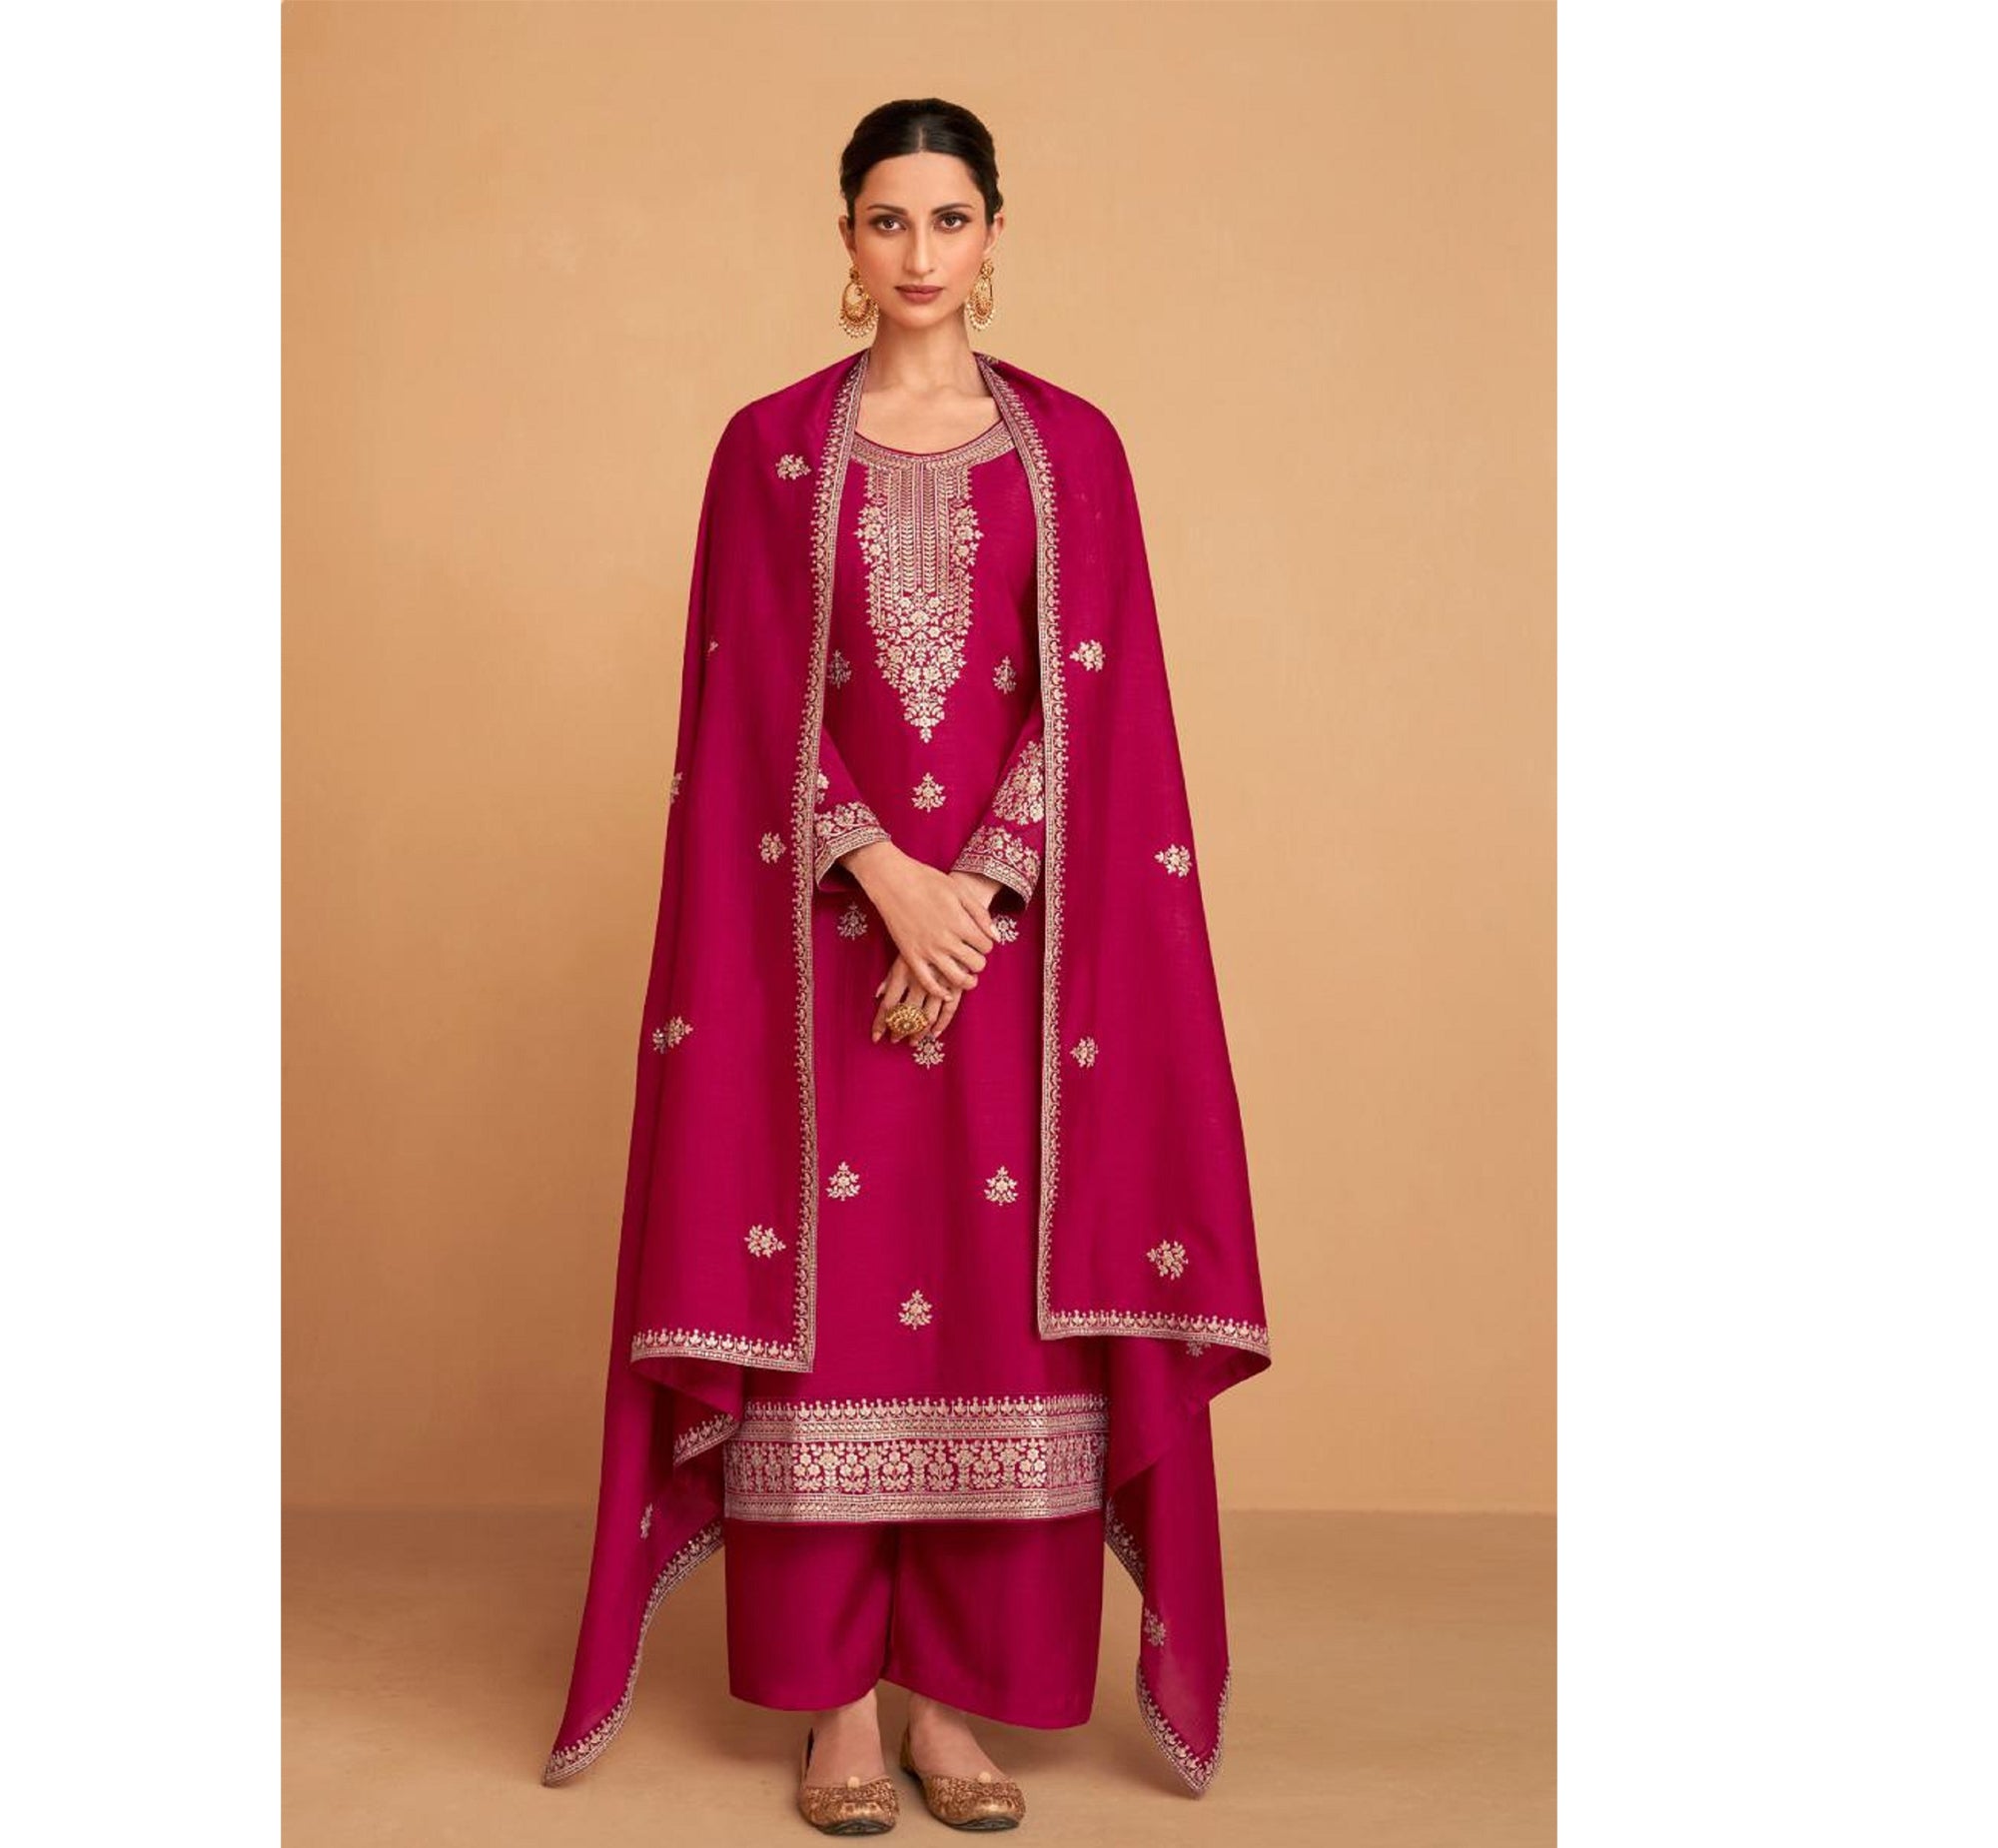 Colorful Indian Designer Salwar Kameez Plazzo Suits